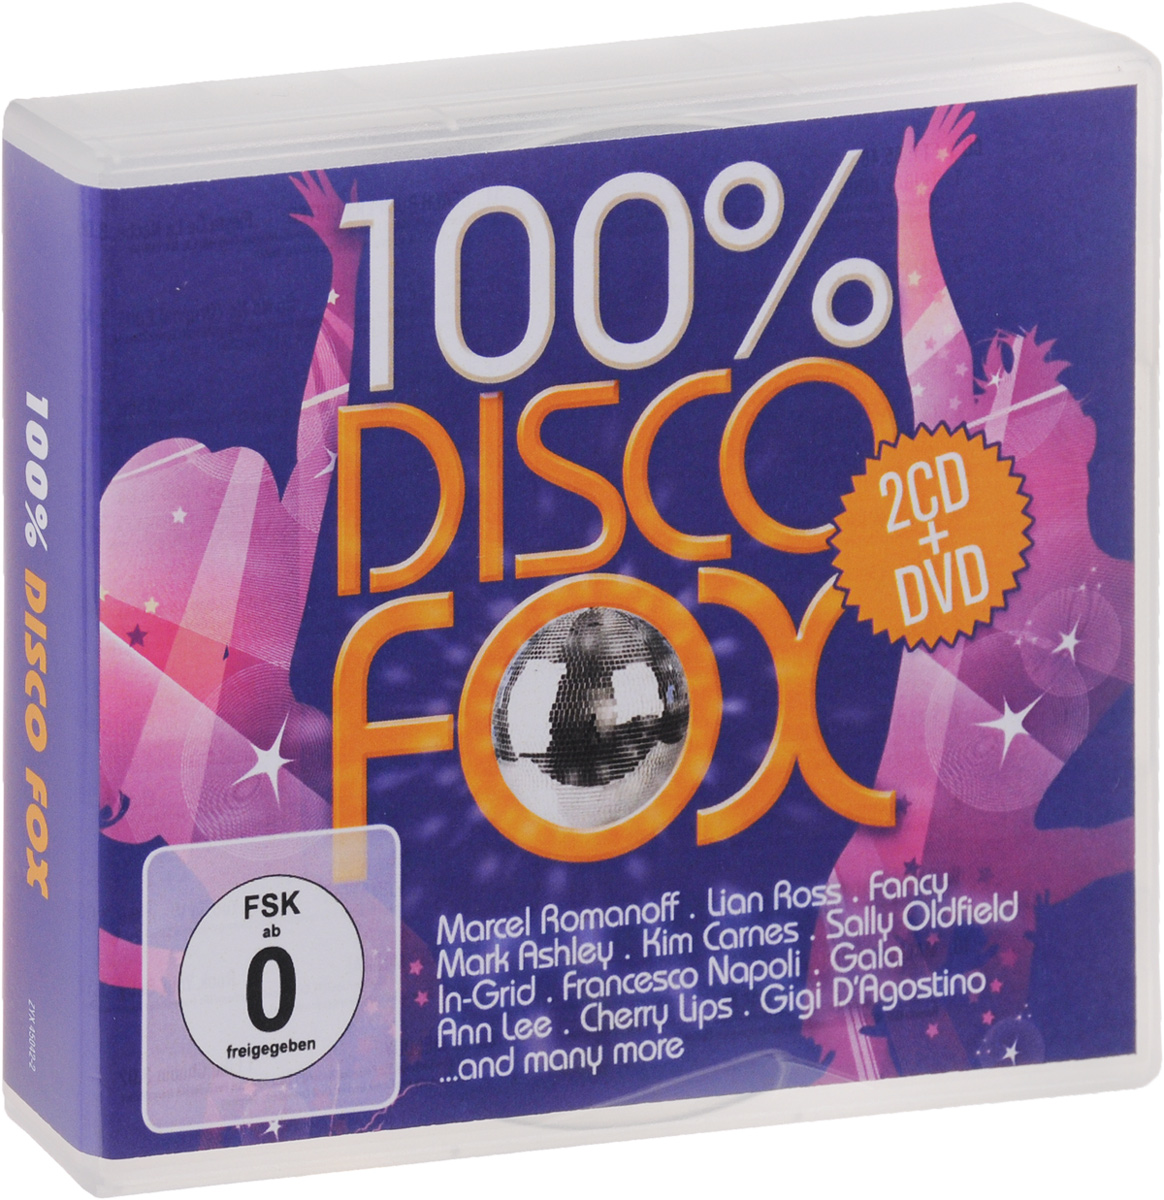 100% Disco Fox (2 CD + DVD)